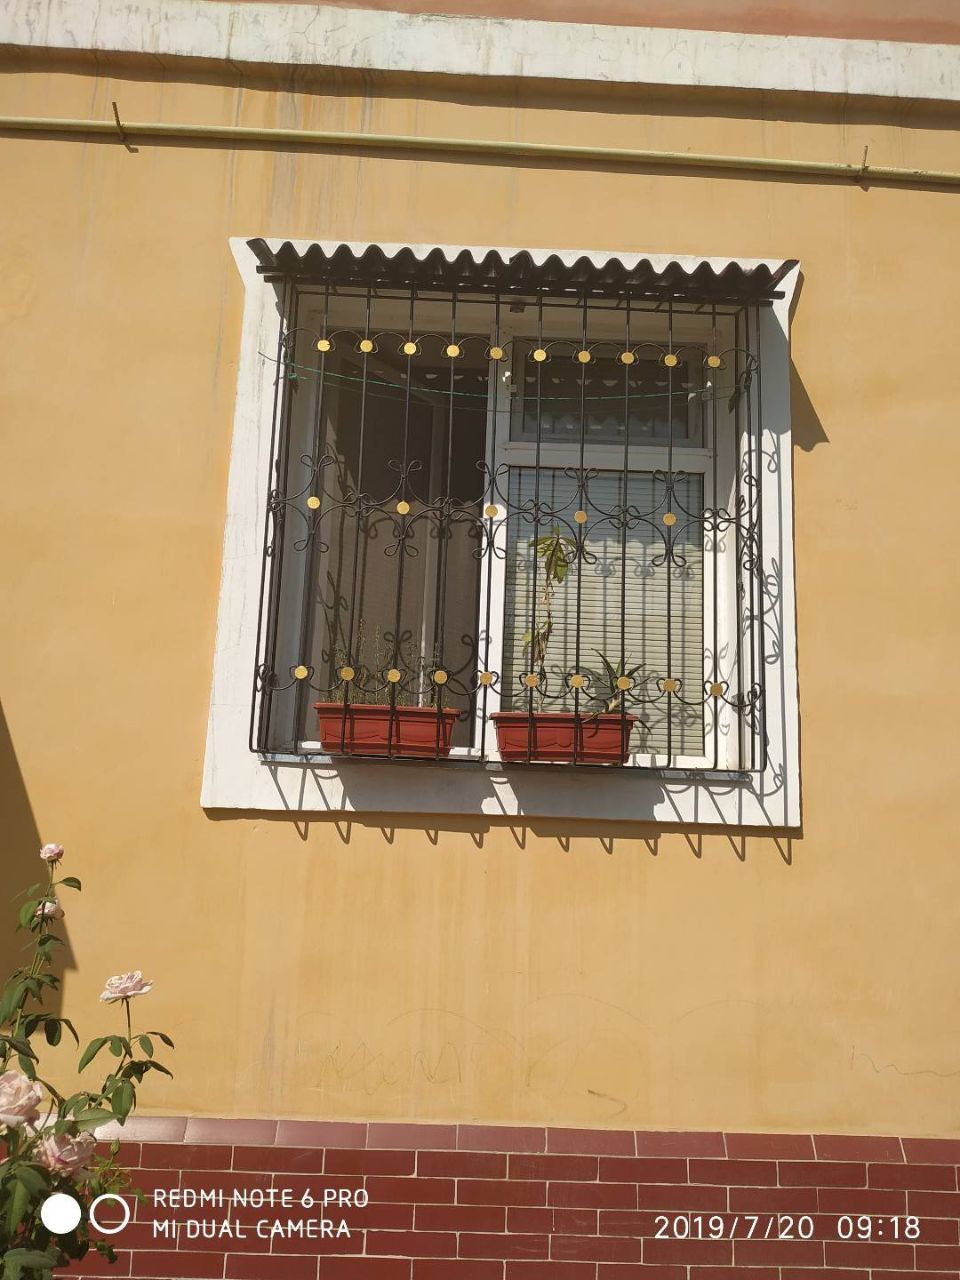 Решетки на окна казырьки